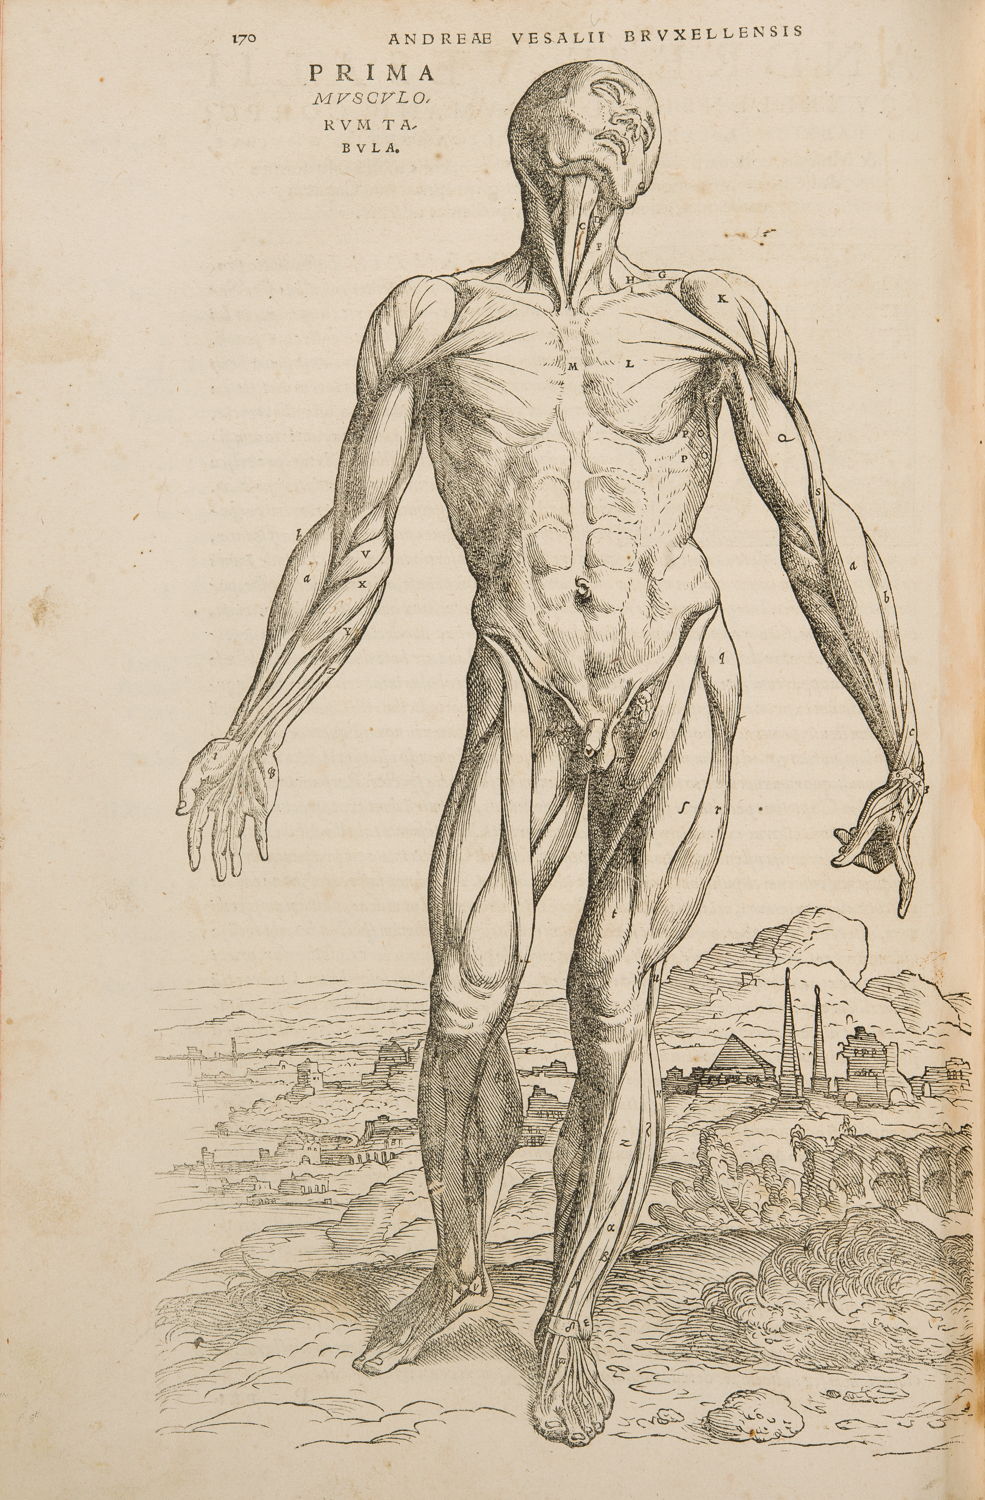 André Vésale, De Humani Corporis Fabrica Libri Septem, Bâle, 1543 © KU Leuven, Bibliothèque universitaire, inv. CaaC17 – Bruno Vandermeulen.